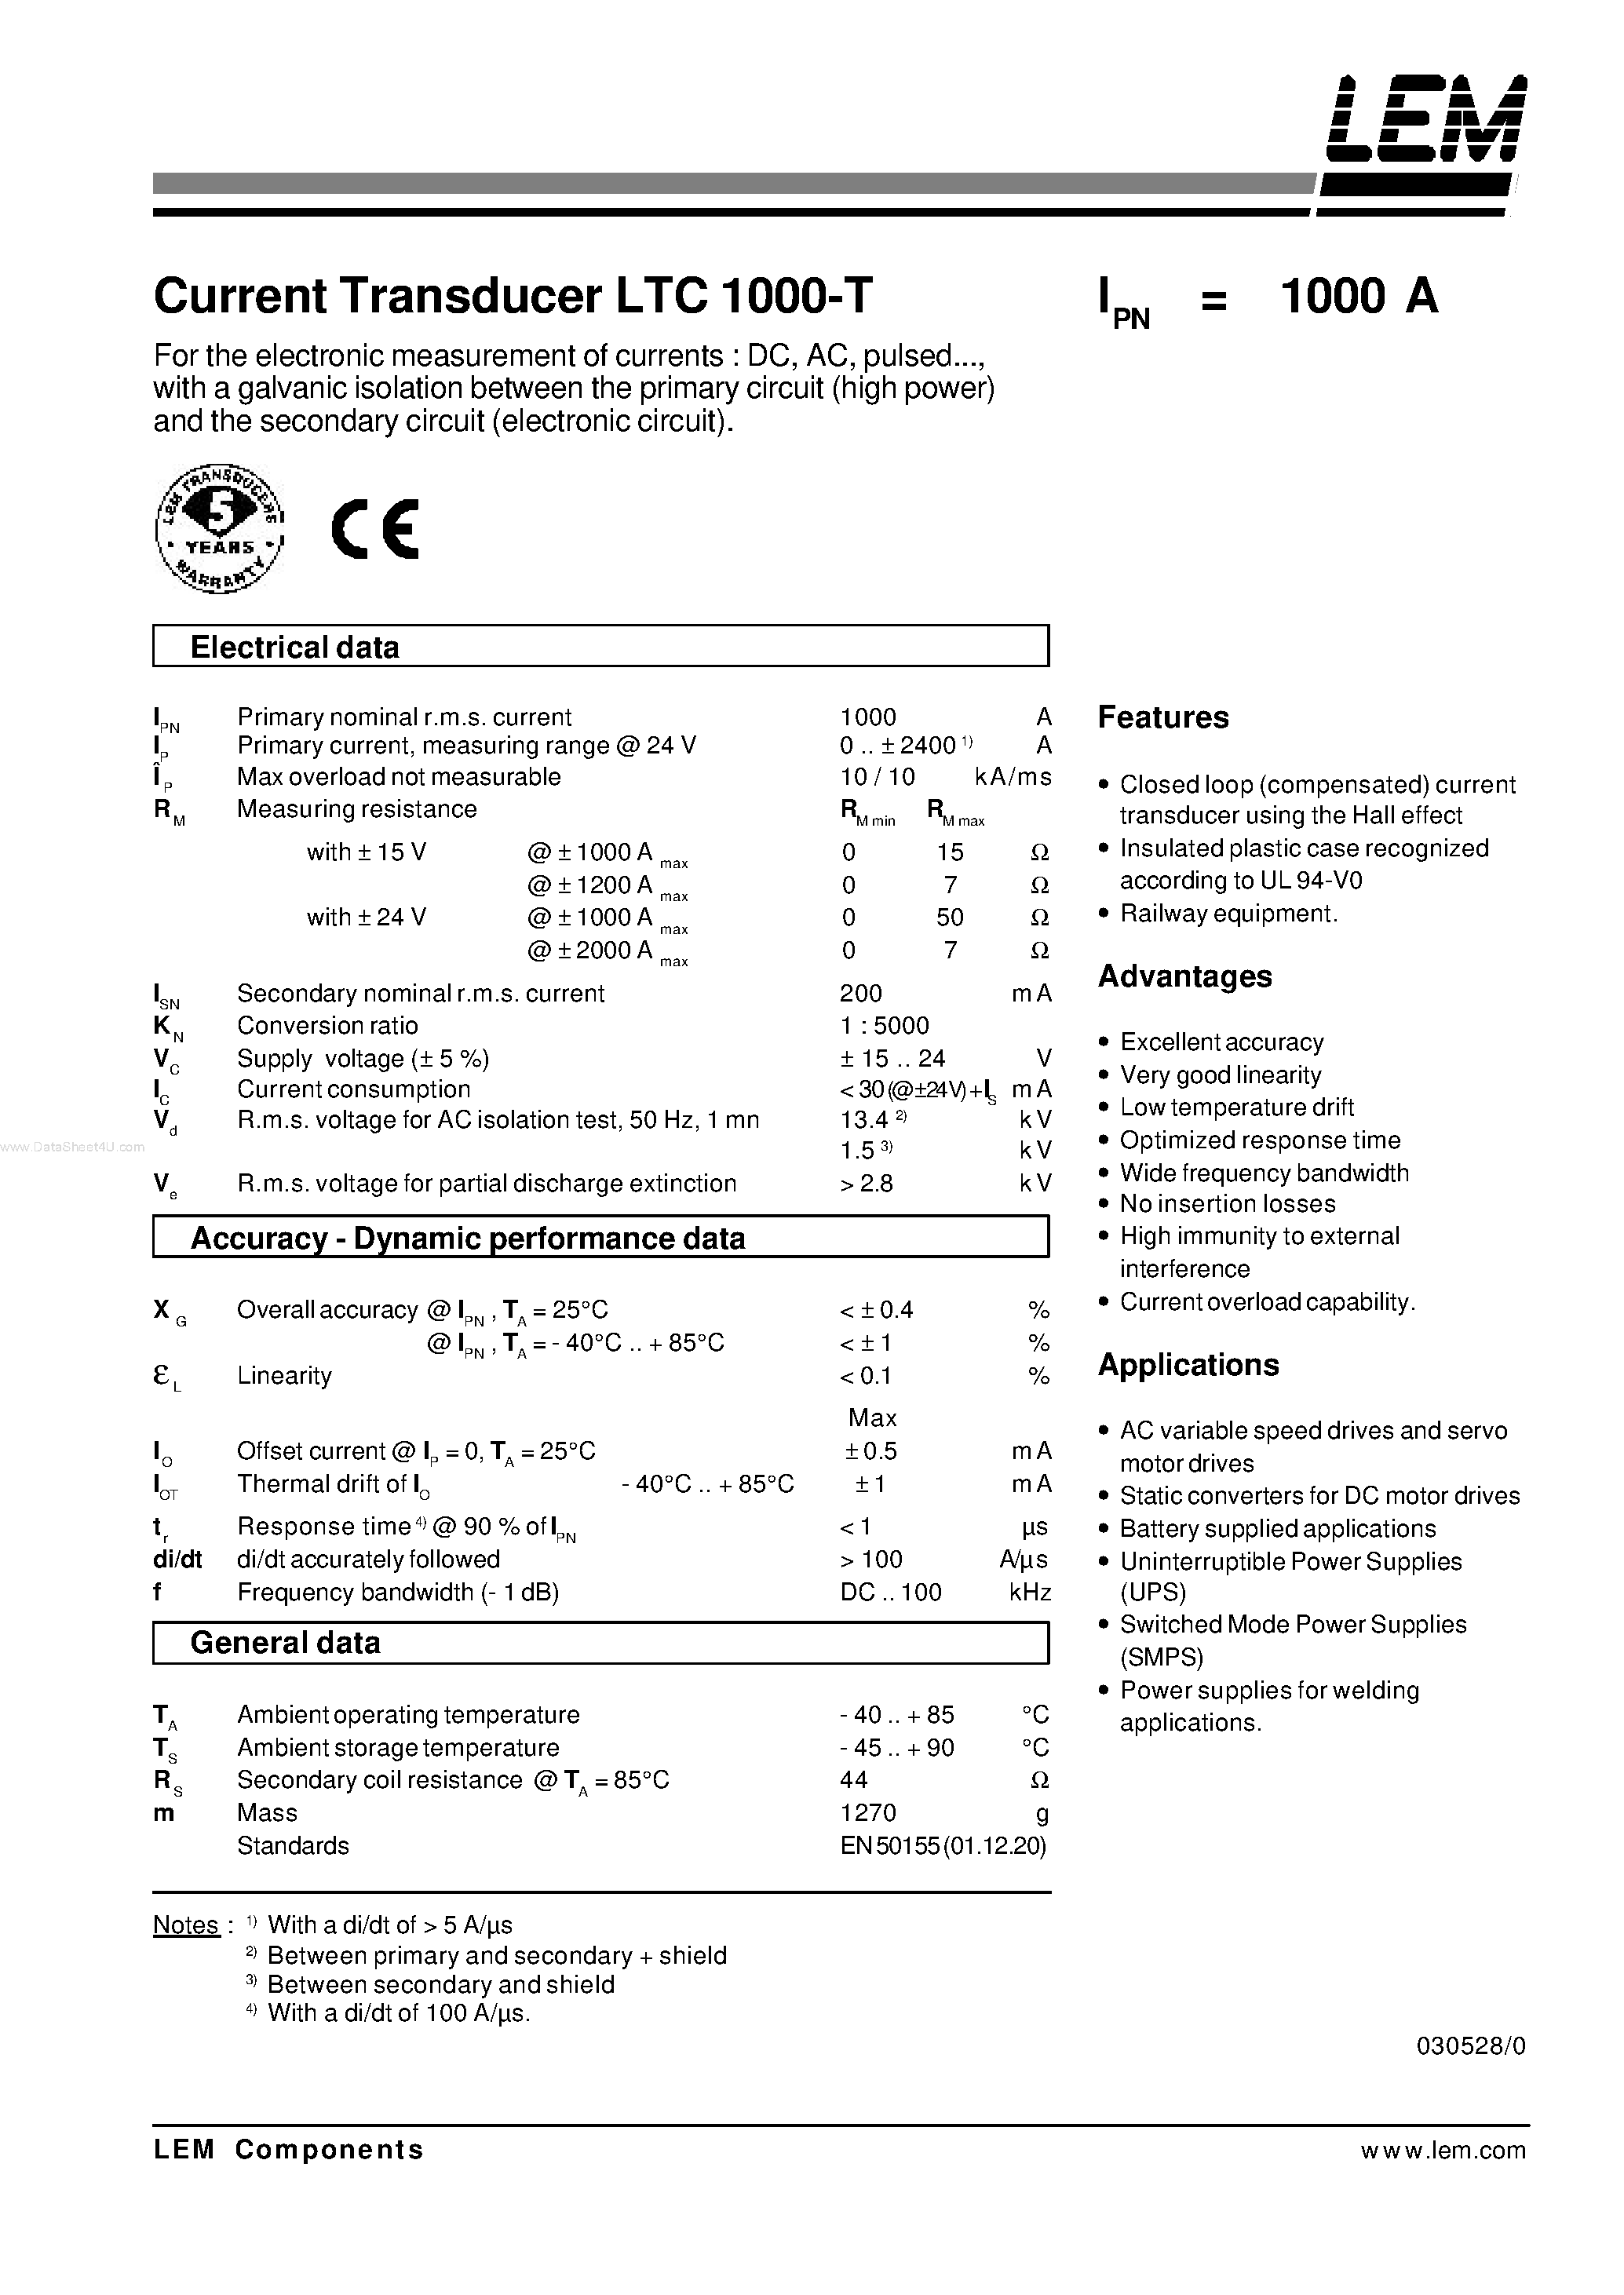 Datasheet LTC1000-T - Current Transducer page 1